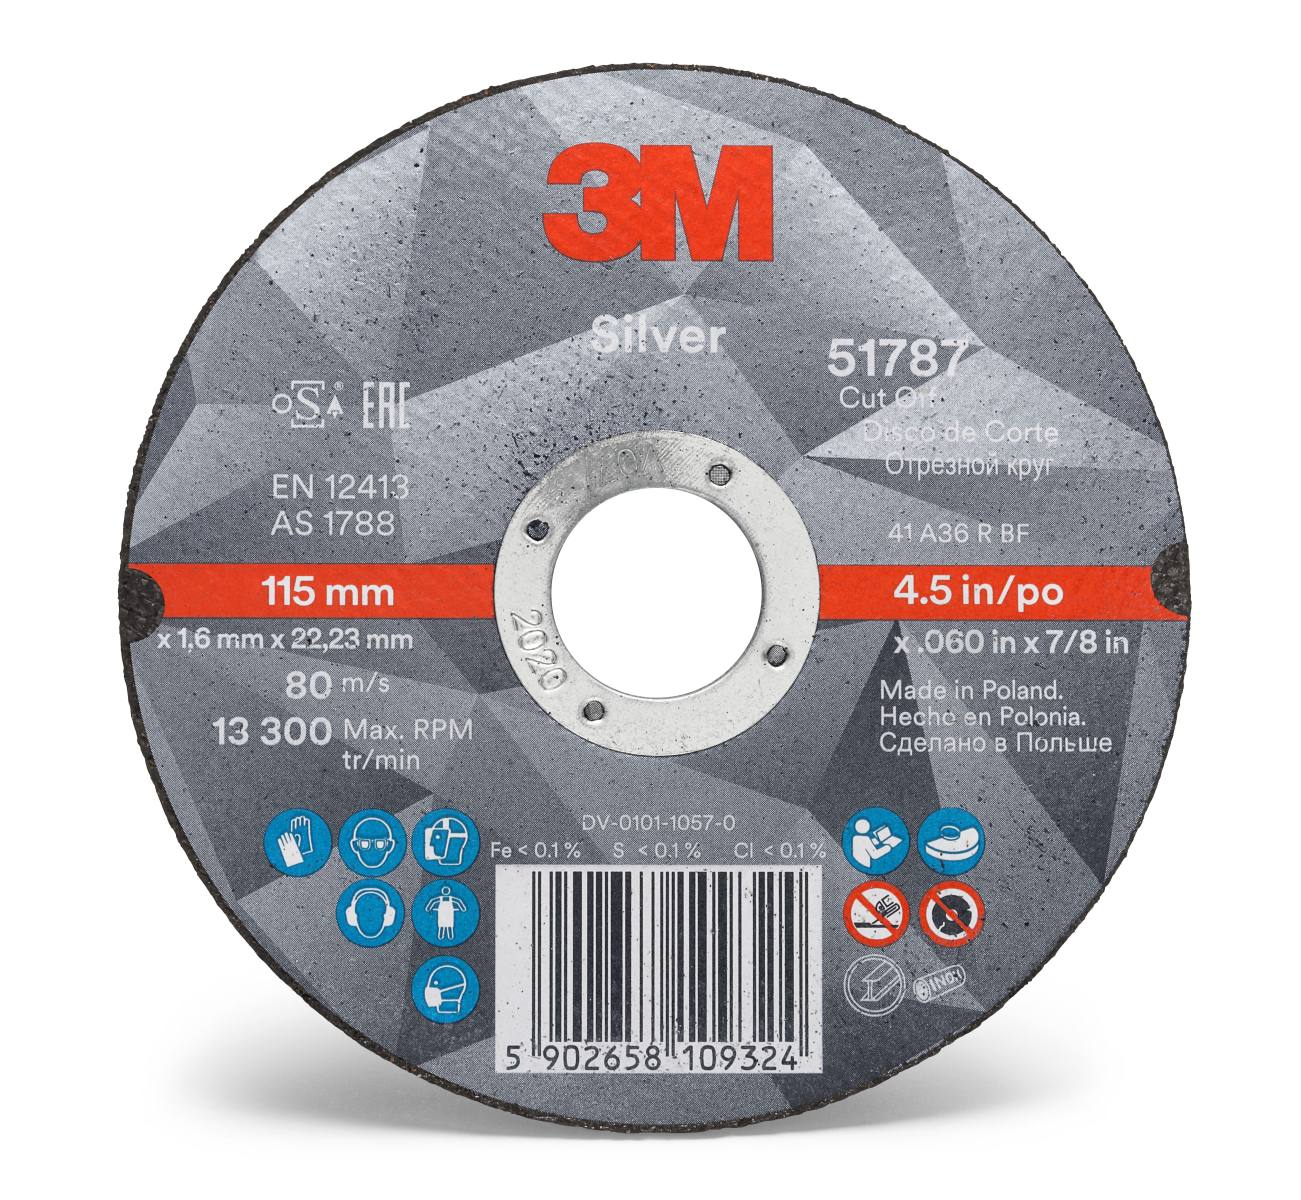 Disco da taglio 3M Silver Cut-Off, 75 mm, 1,0 mm, 6 mm, T41, 51765